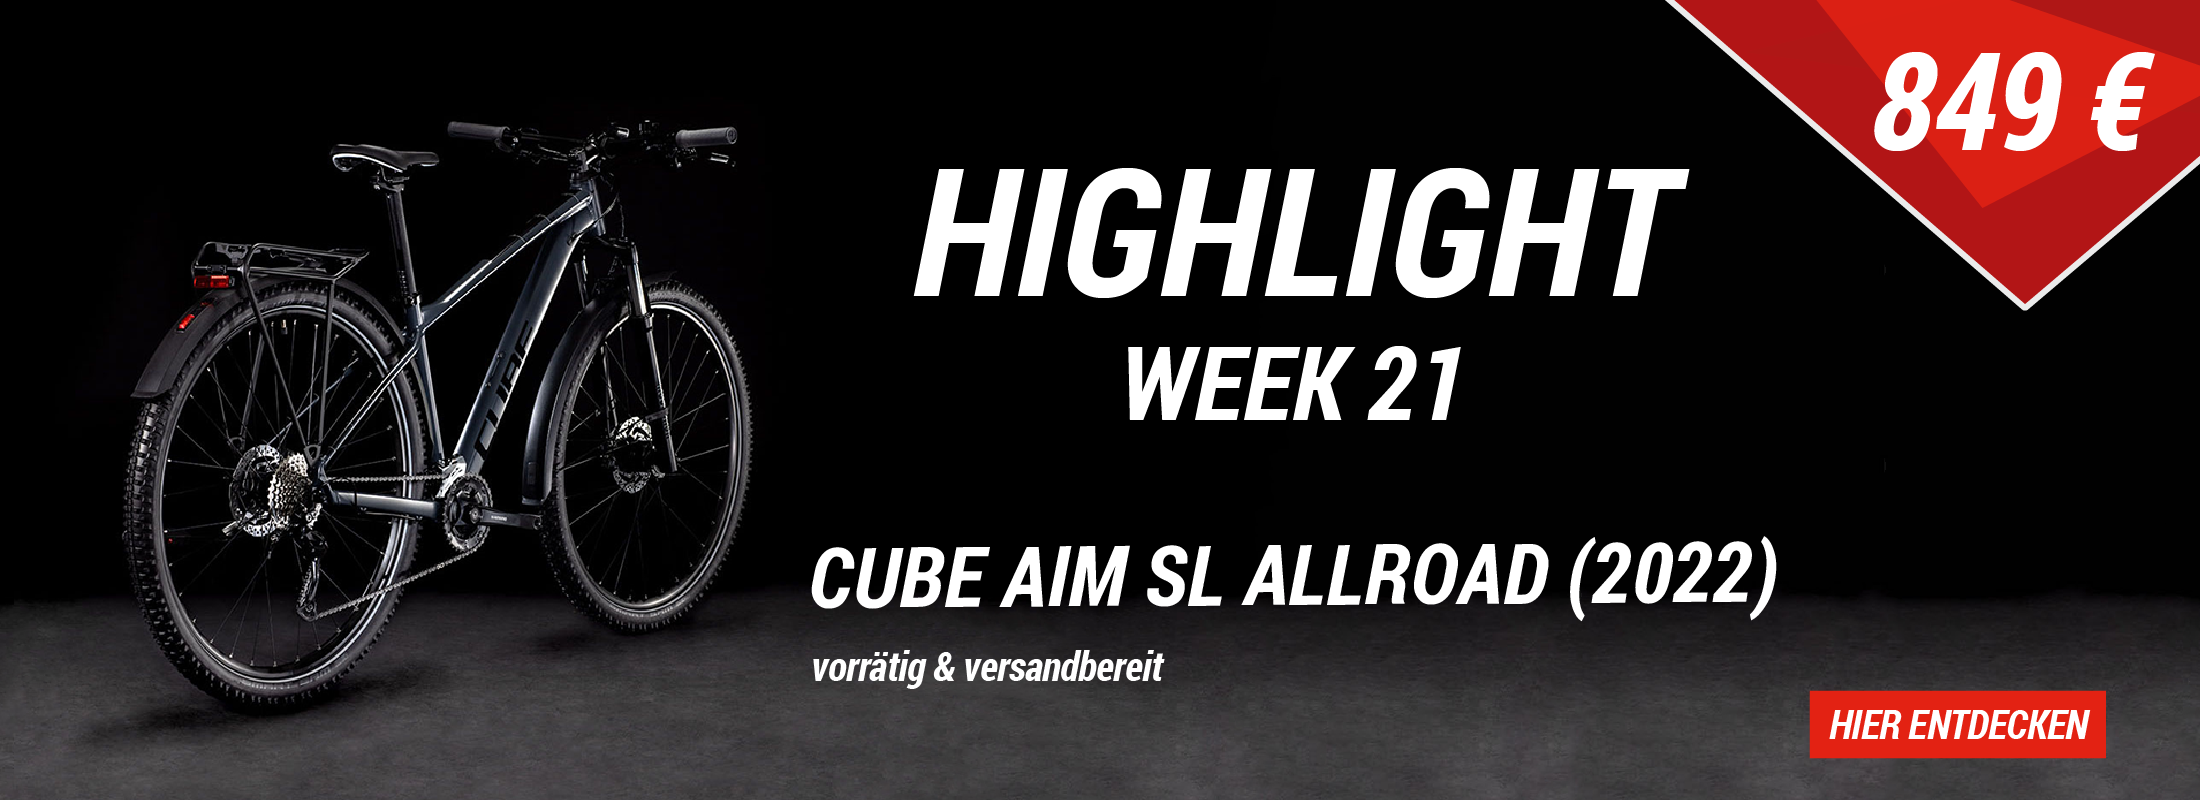 Highlight der Woche Aim SL Allroad